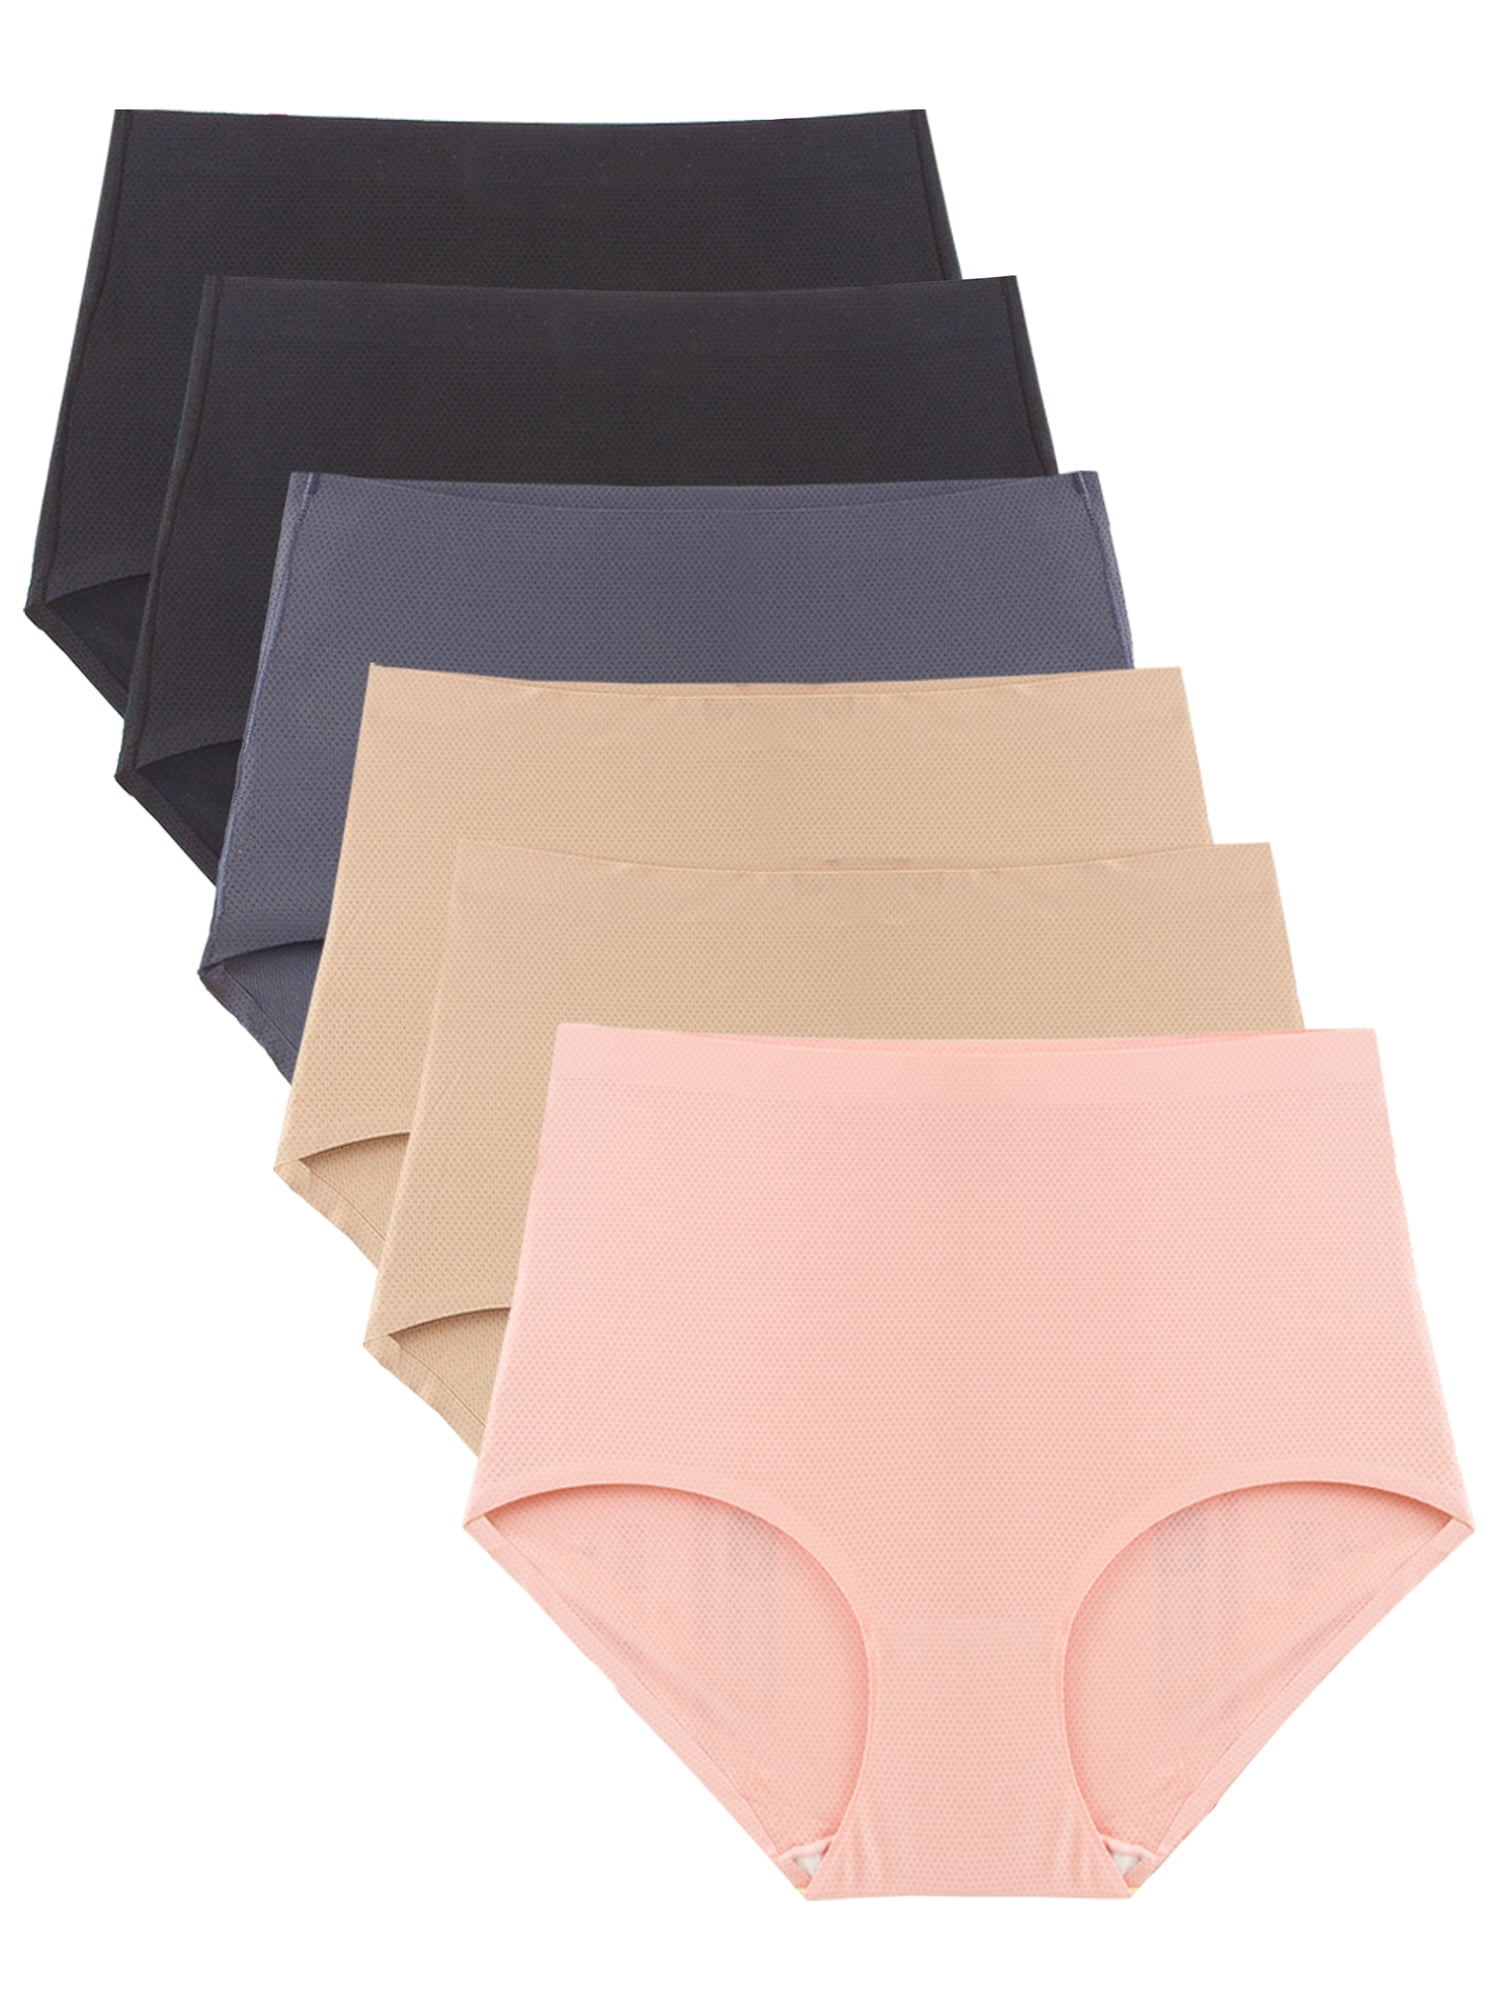  Huilaibazo Multipack Brief Panties For Women Seamless